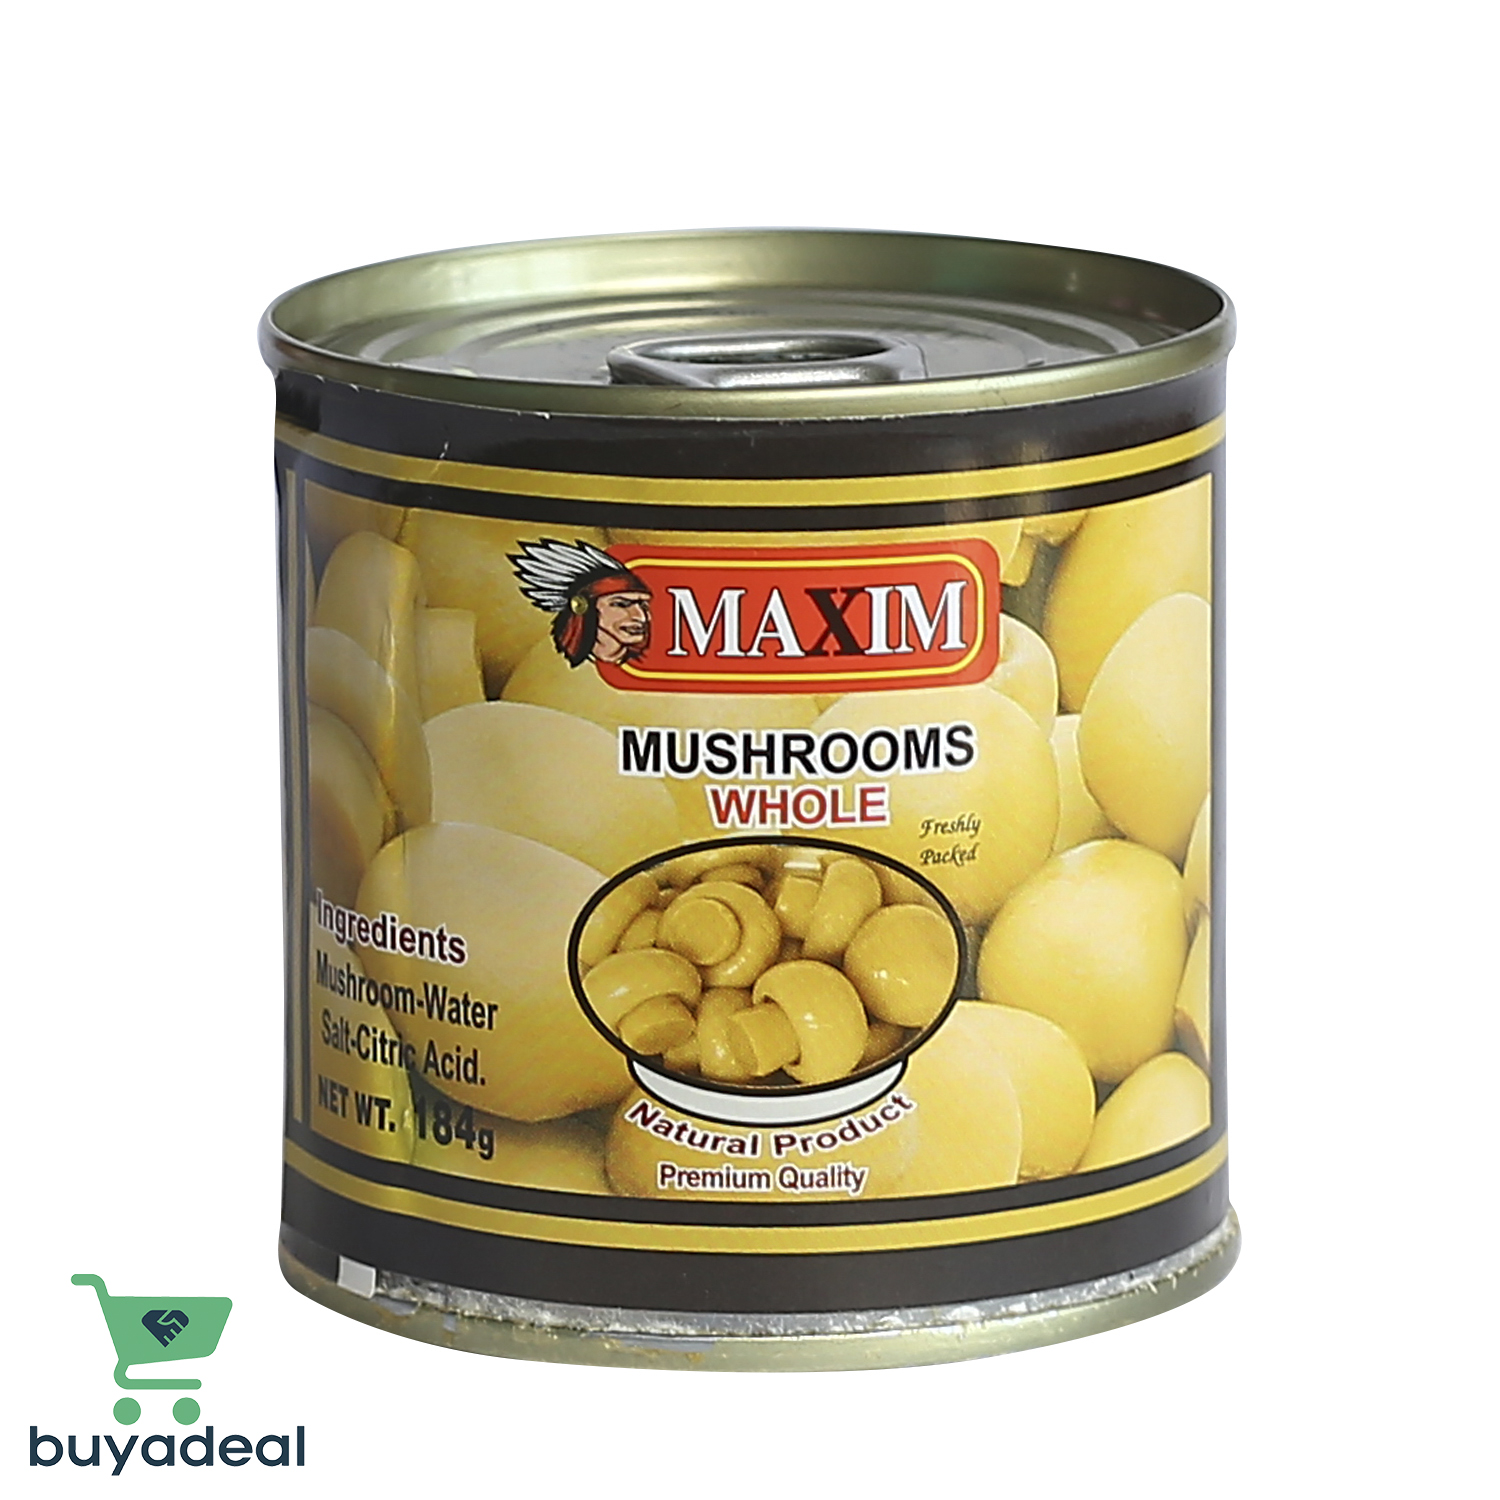 Buyadeal Product Maxim Mushroom whole - 184g